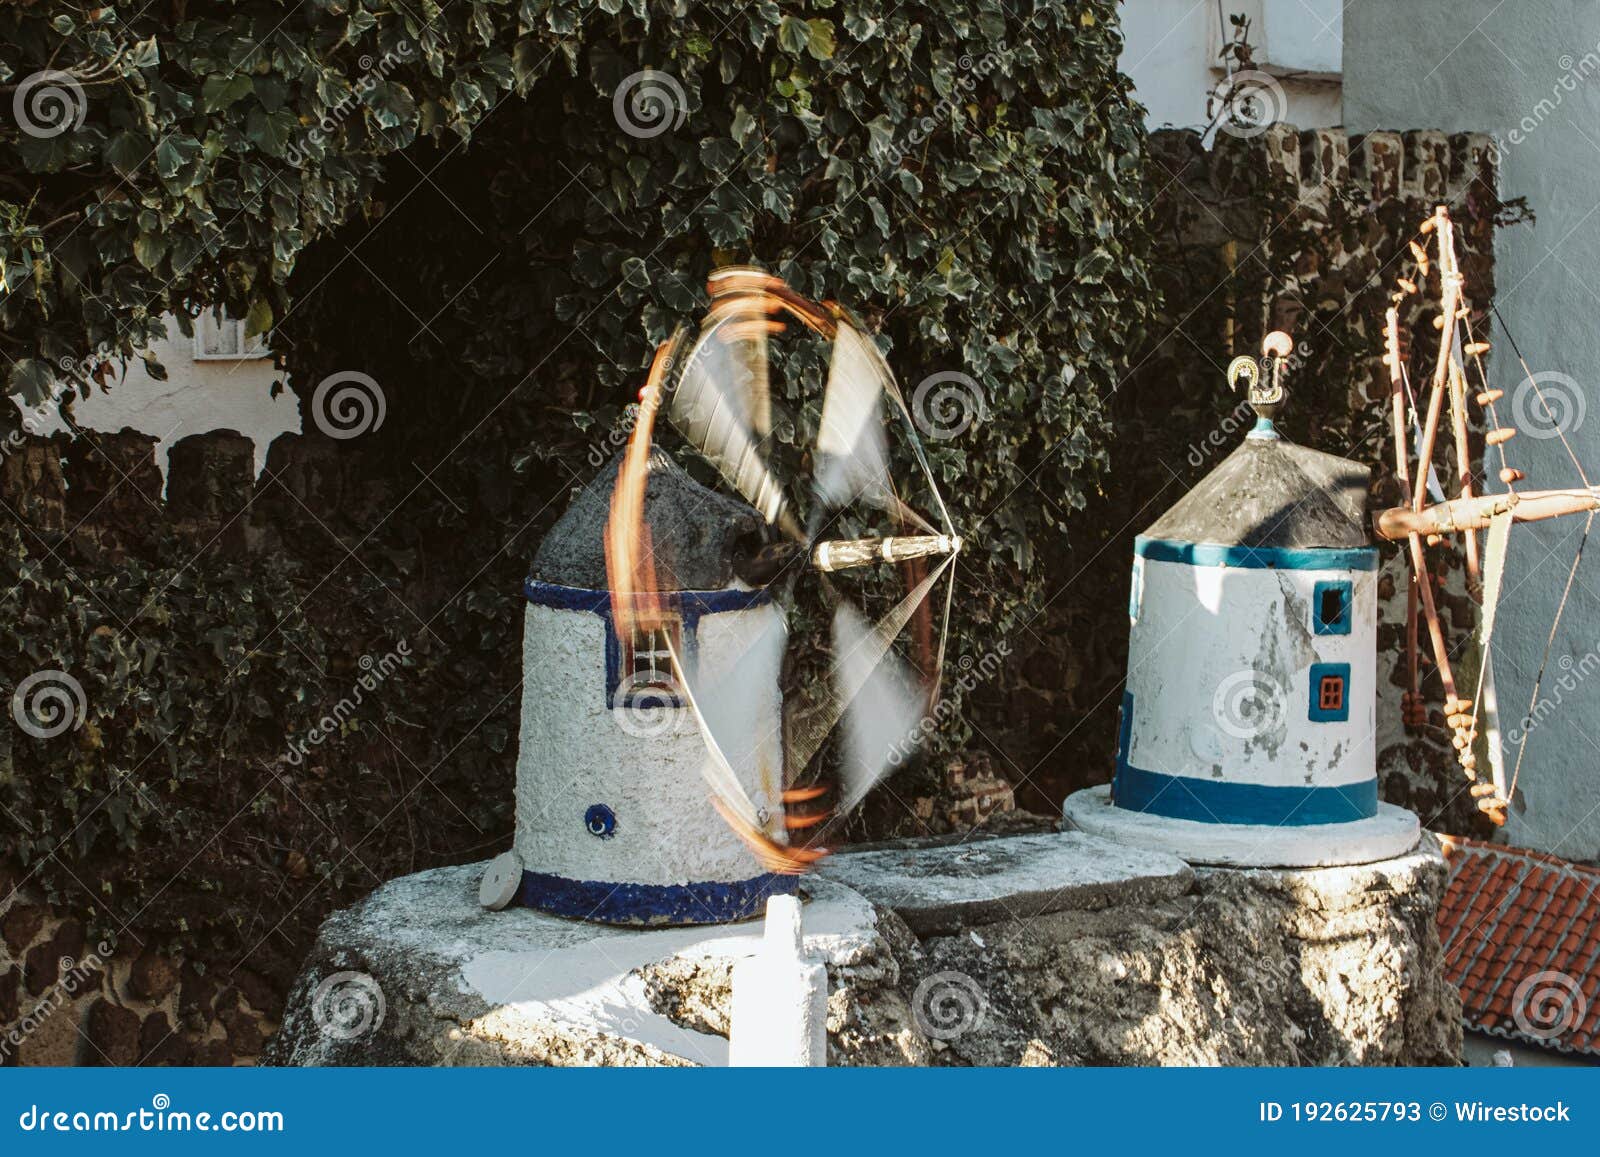 small windmills in an amusement park in aldeia jose franco, mafra, portugal